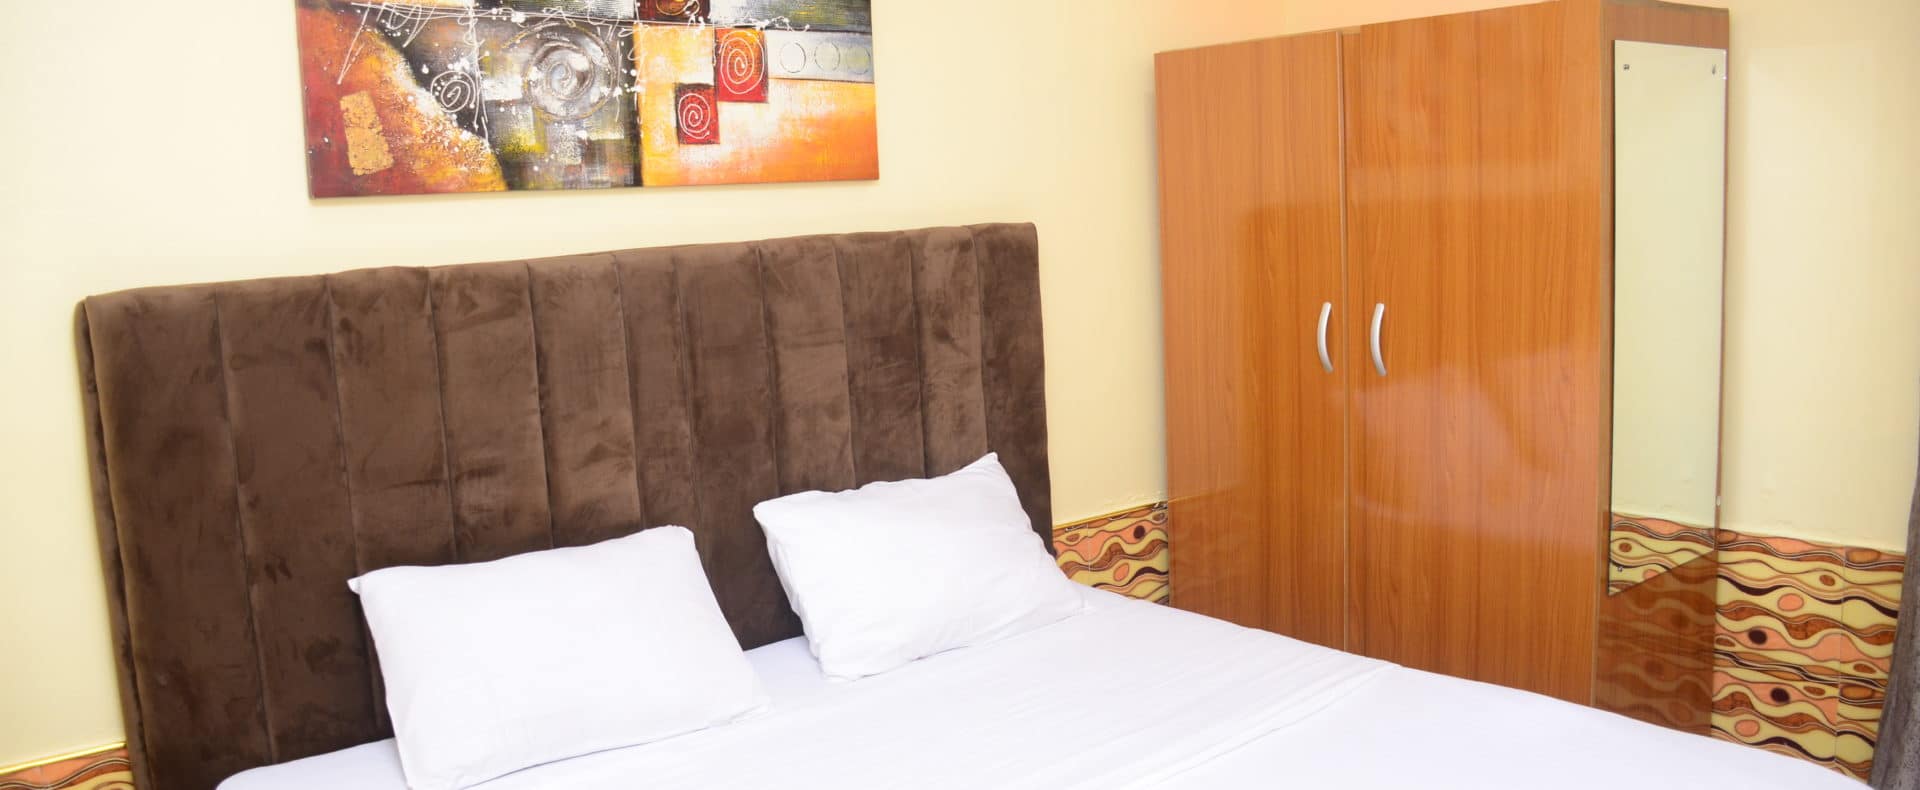 1 Bedroom Apartment For Shortlet In Lagos Nigeria